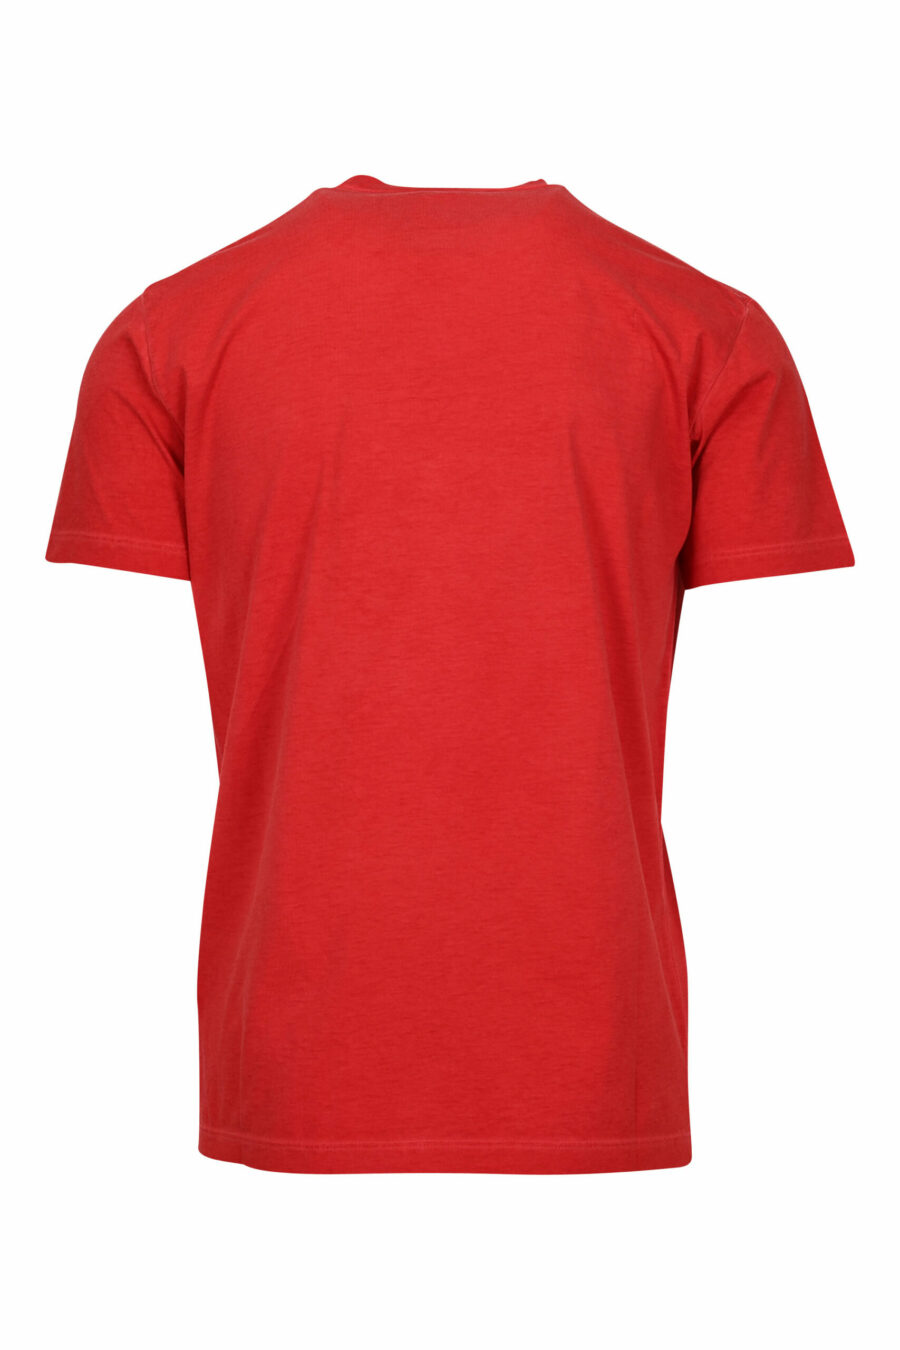 Rotes T-Shirt mit "vip" Maxilogo - 8054148578923 1 skaliert